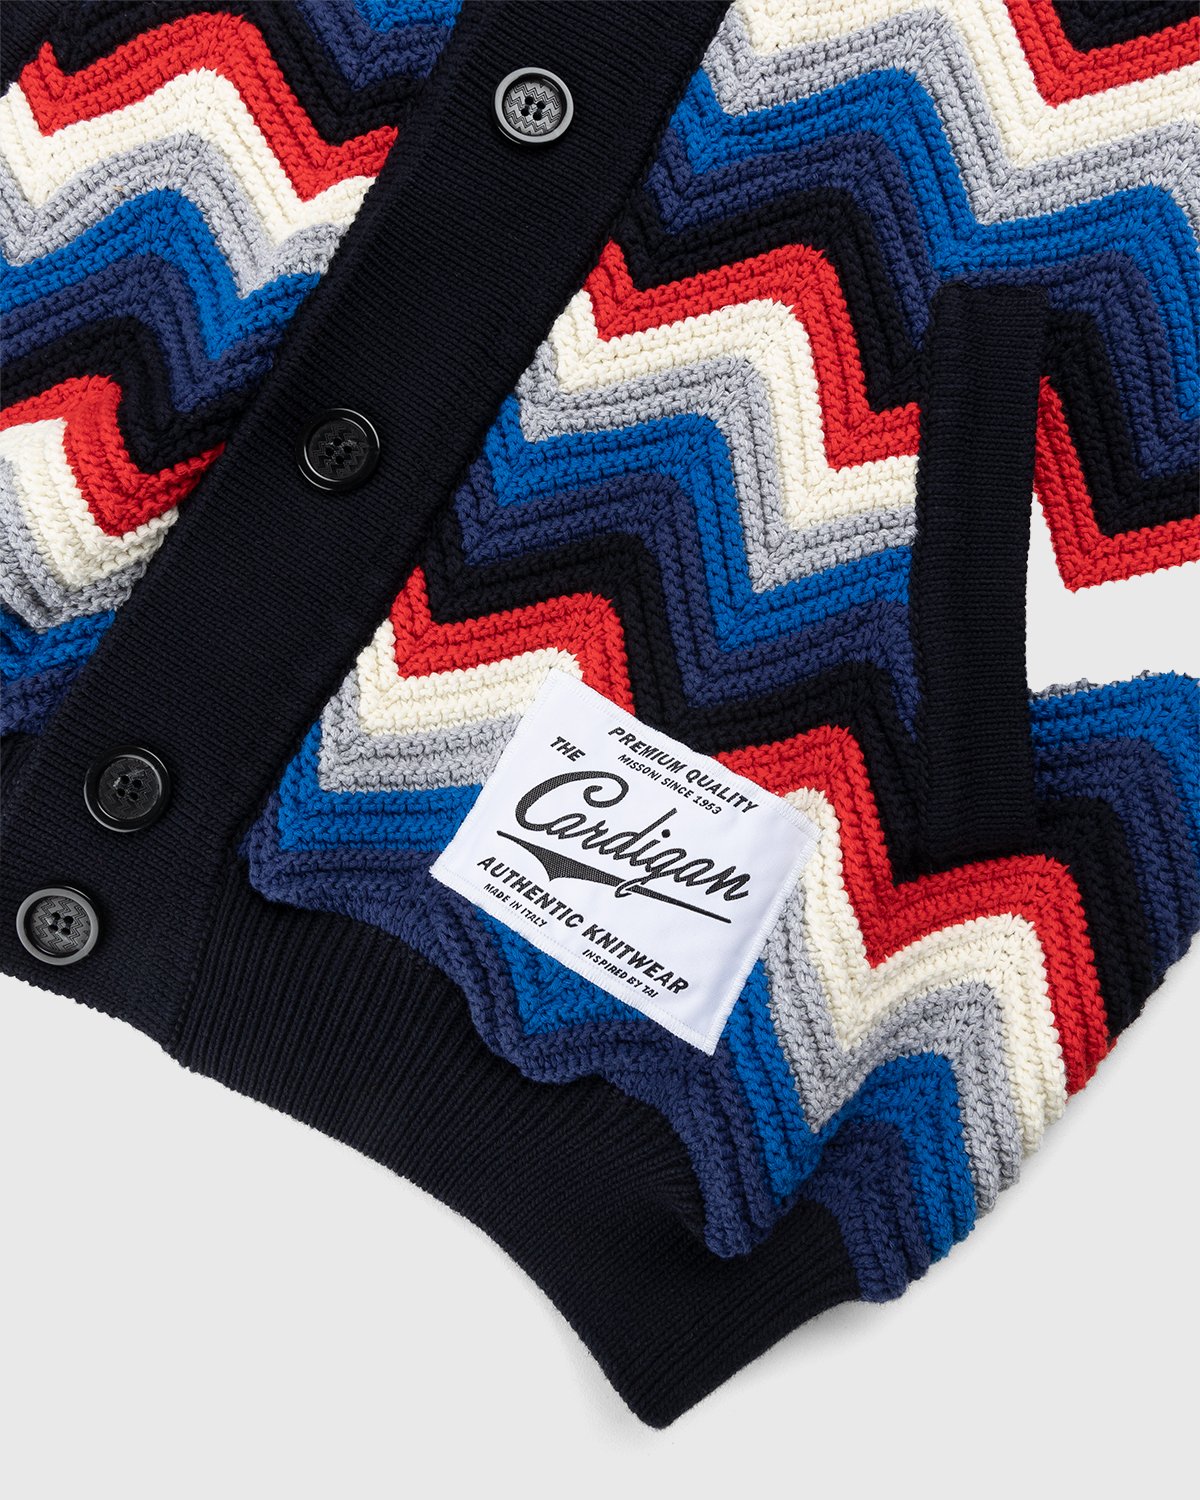 Missoni - Wavy Cotton Cardigan Multi - Clothing - Multi - Image 4